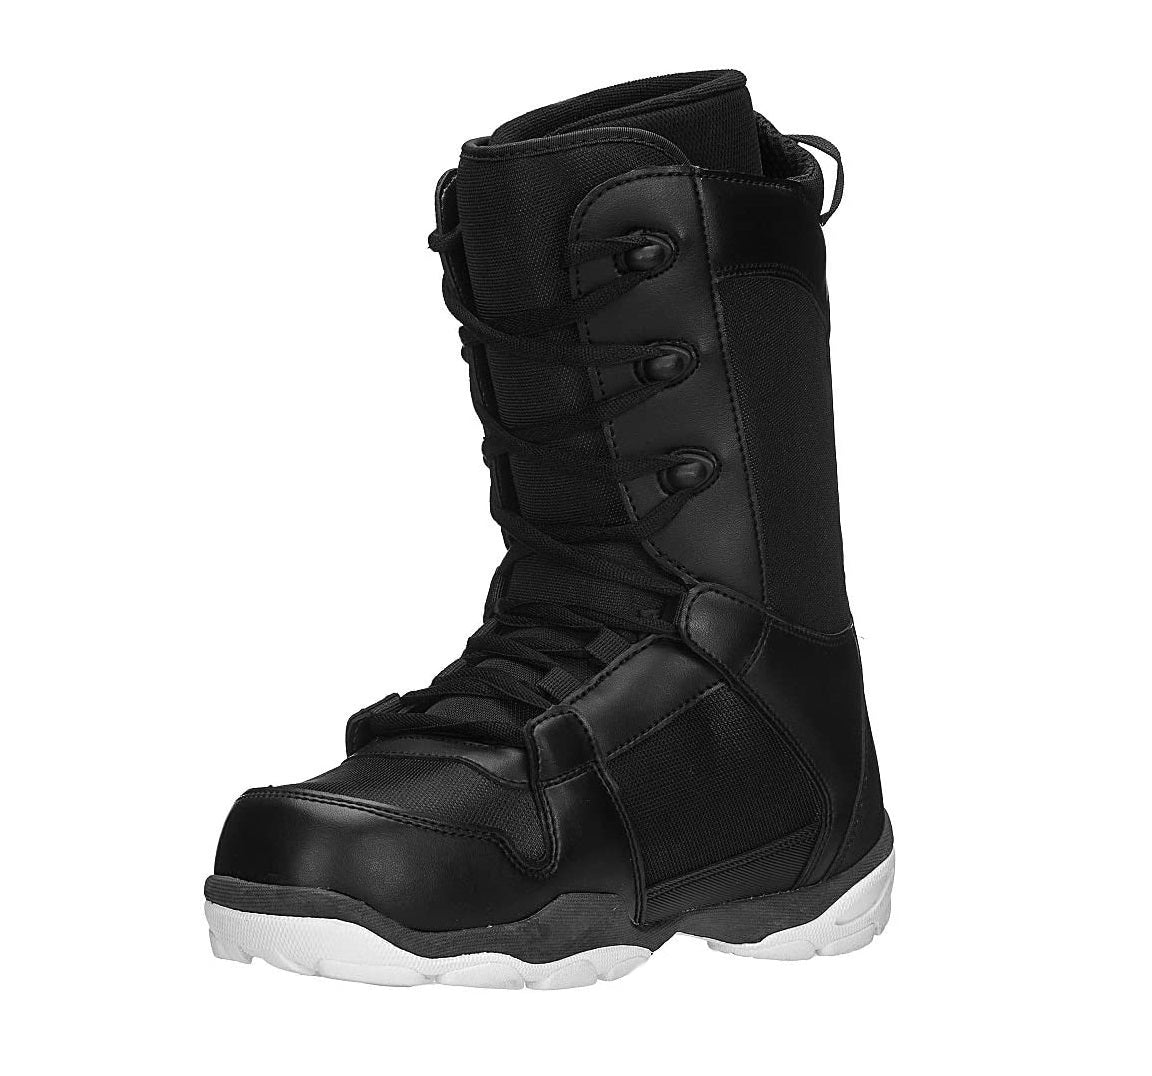 5th Element ST-1 Boots - Black